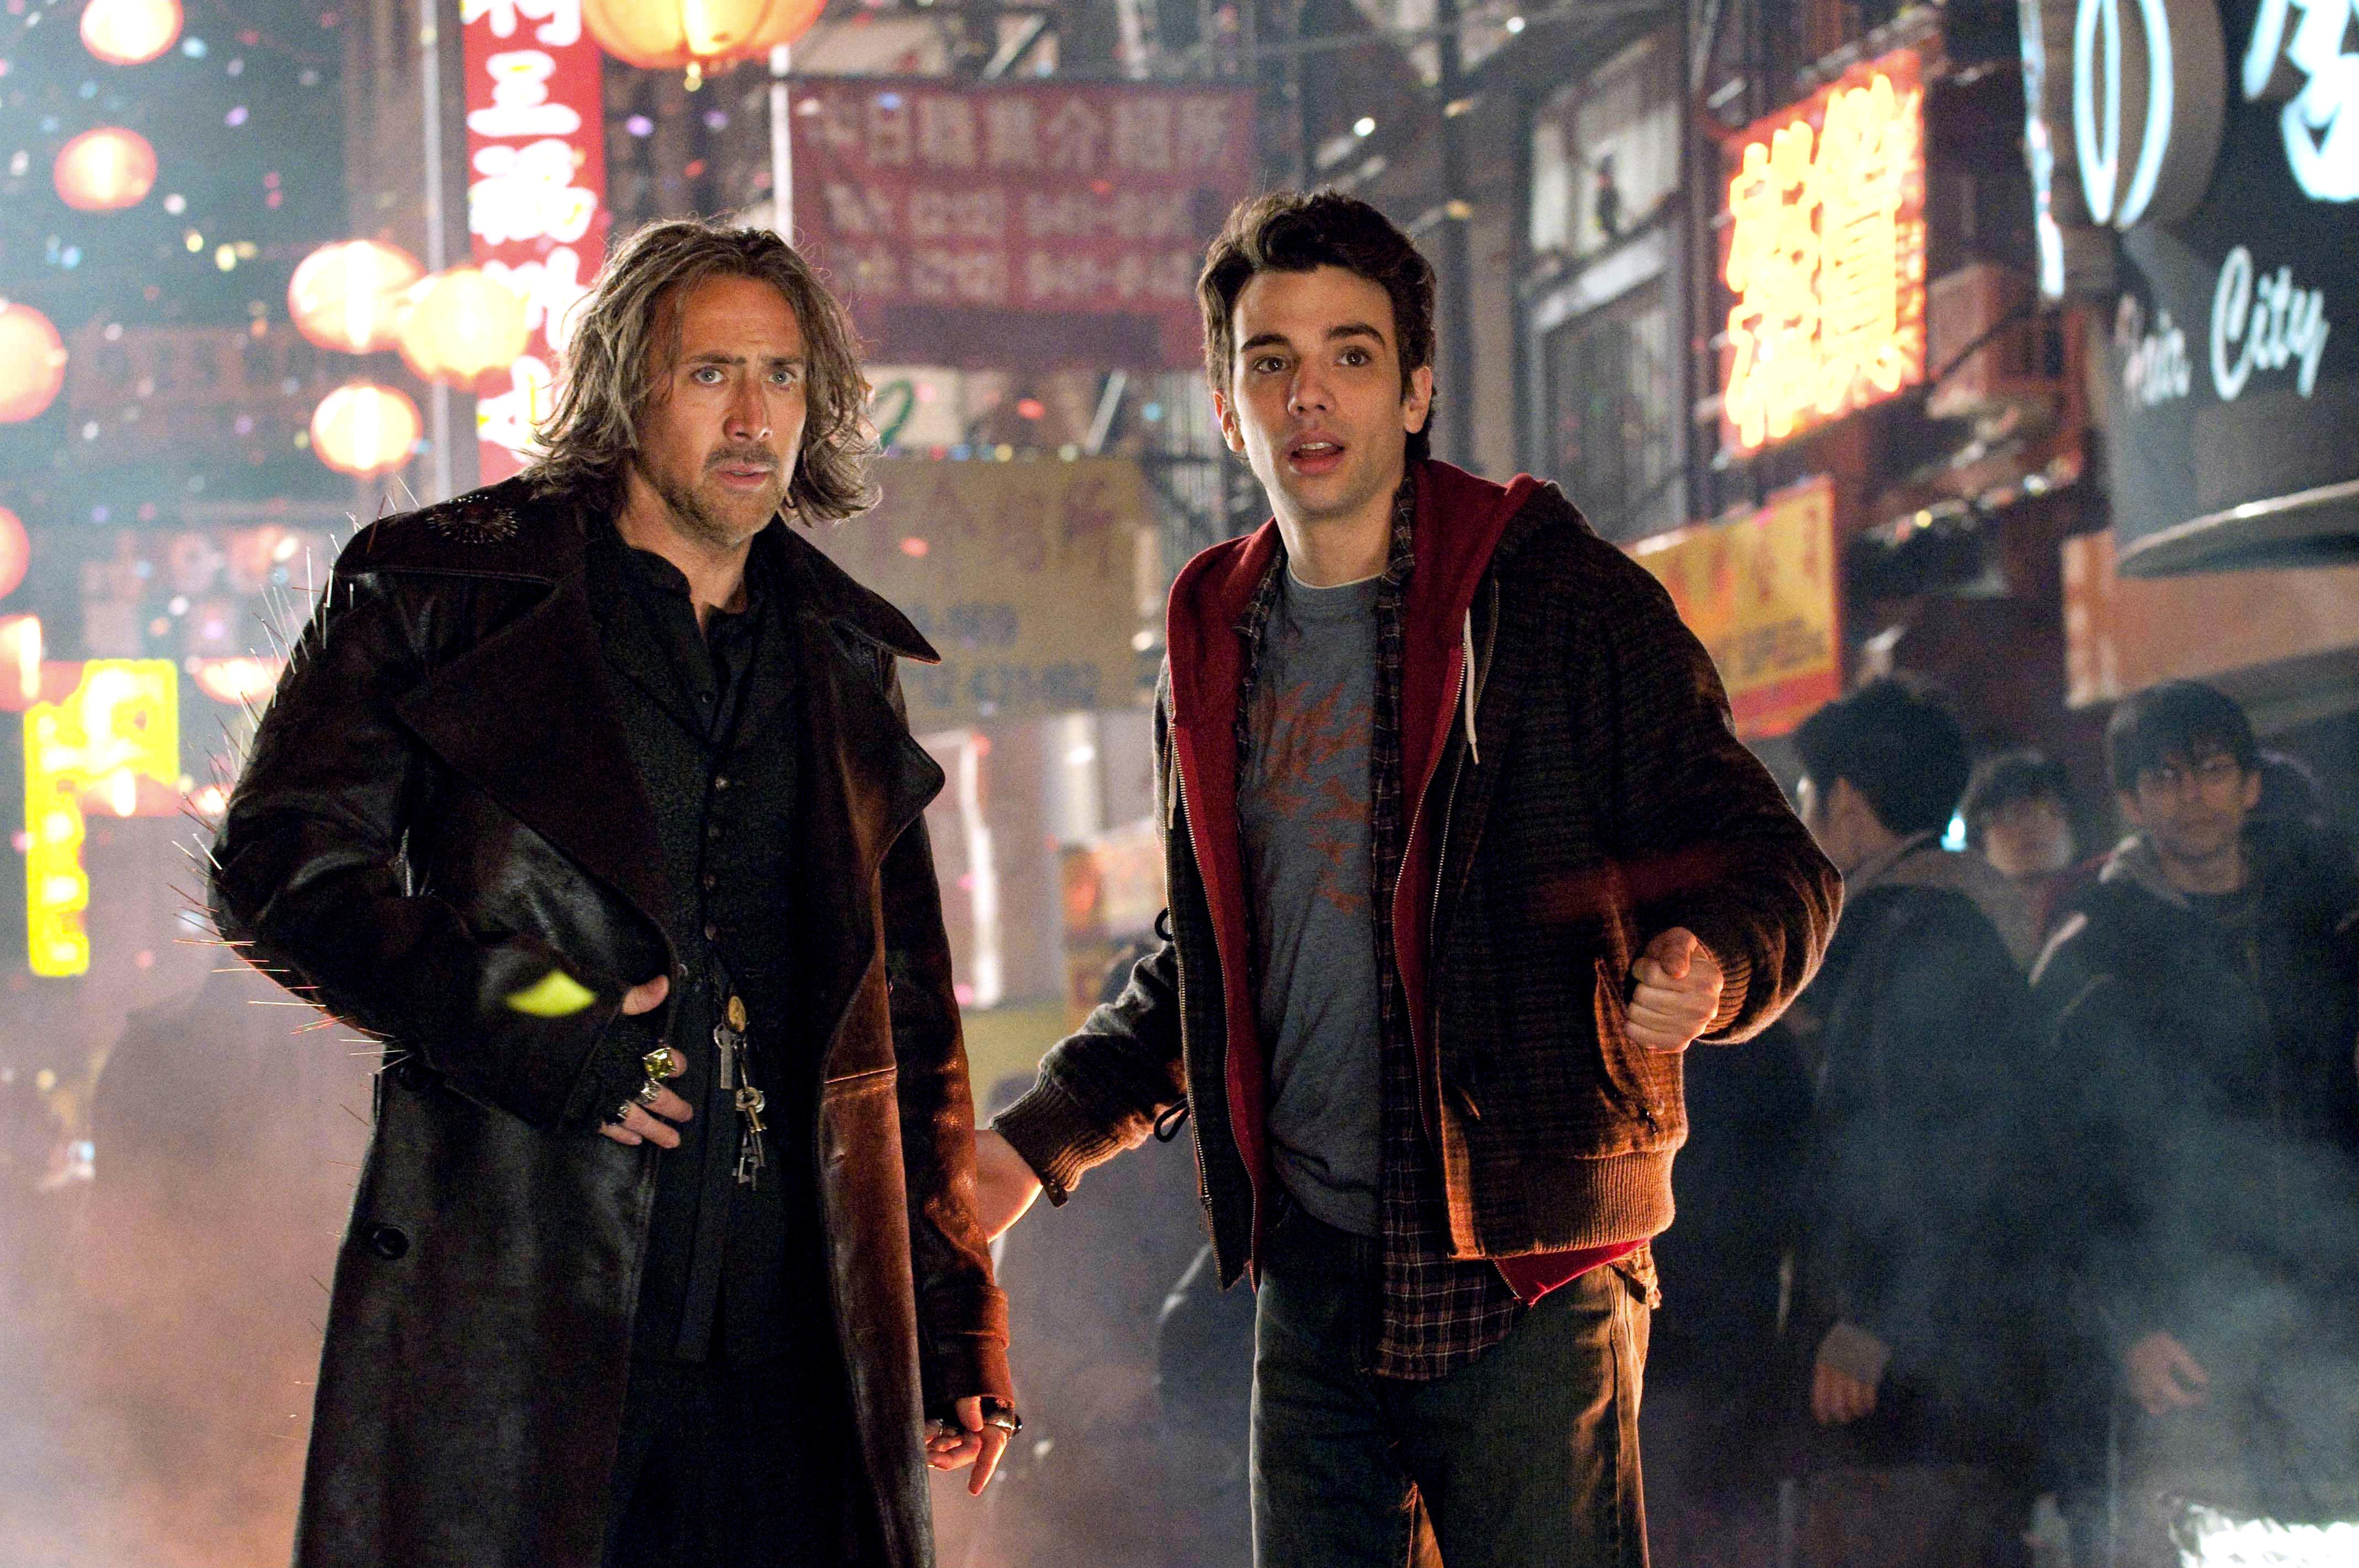 Nicolas Cage and Jay Baruchel in “The Sorcerer’s Apprentice”